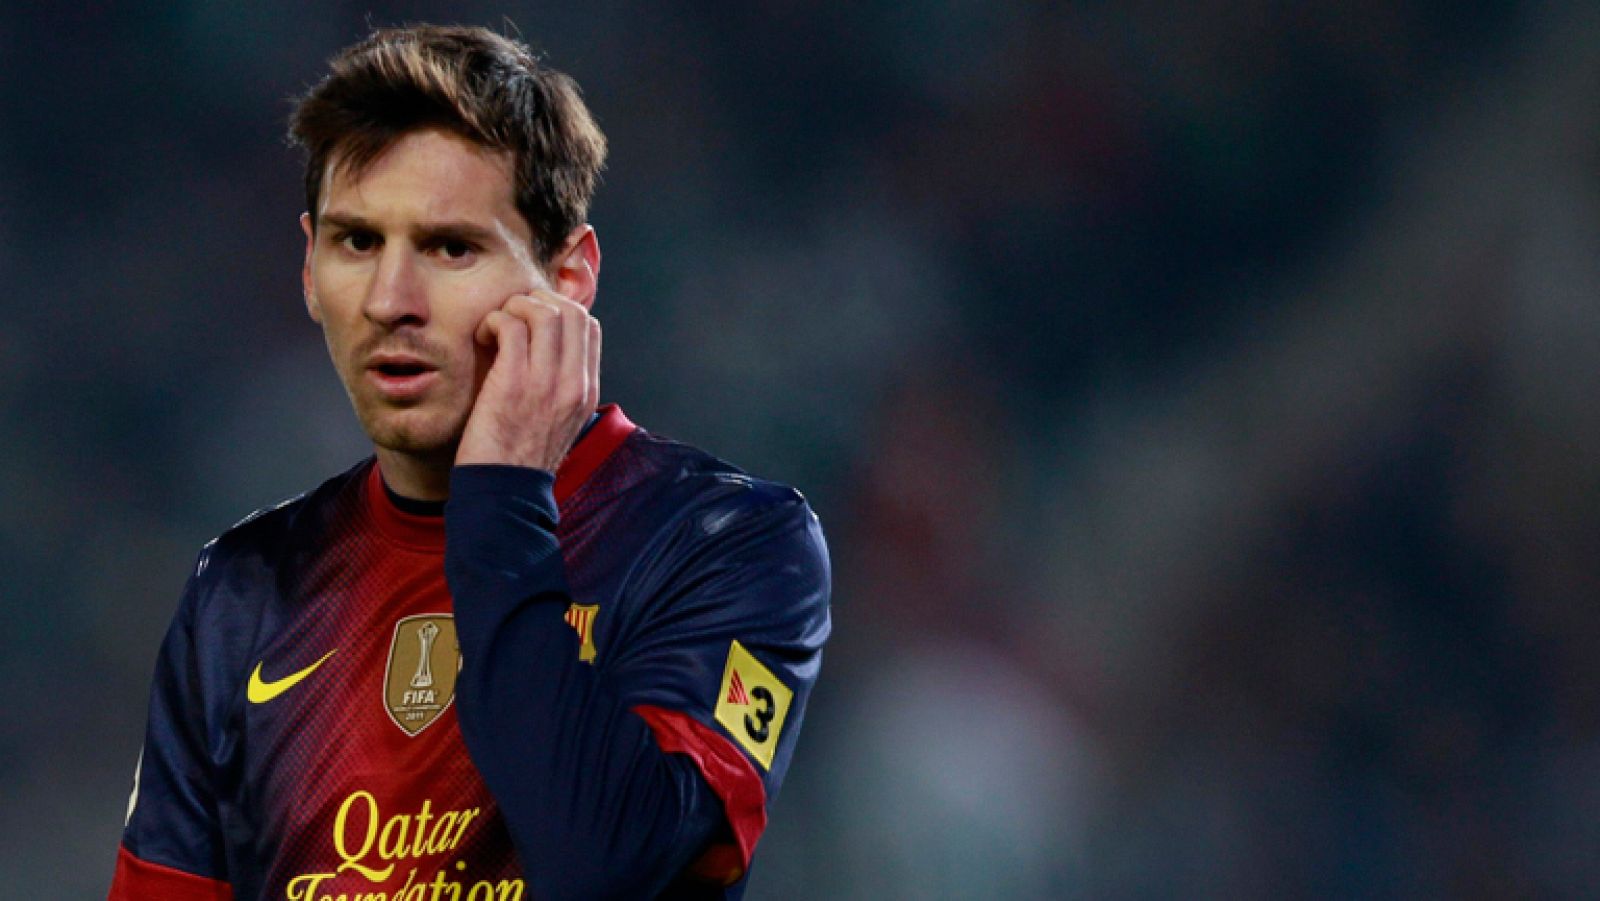 La Mañana de La 1 - Messi acusado de fraude fiscal